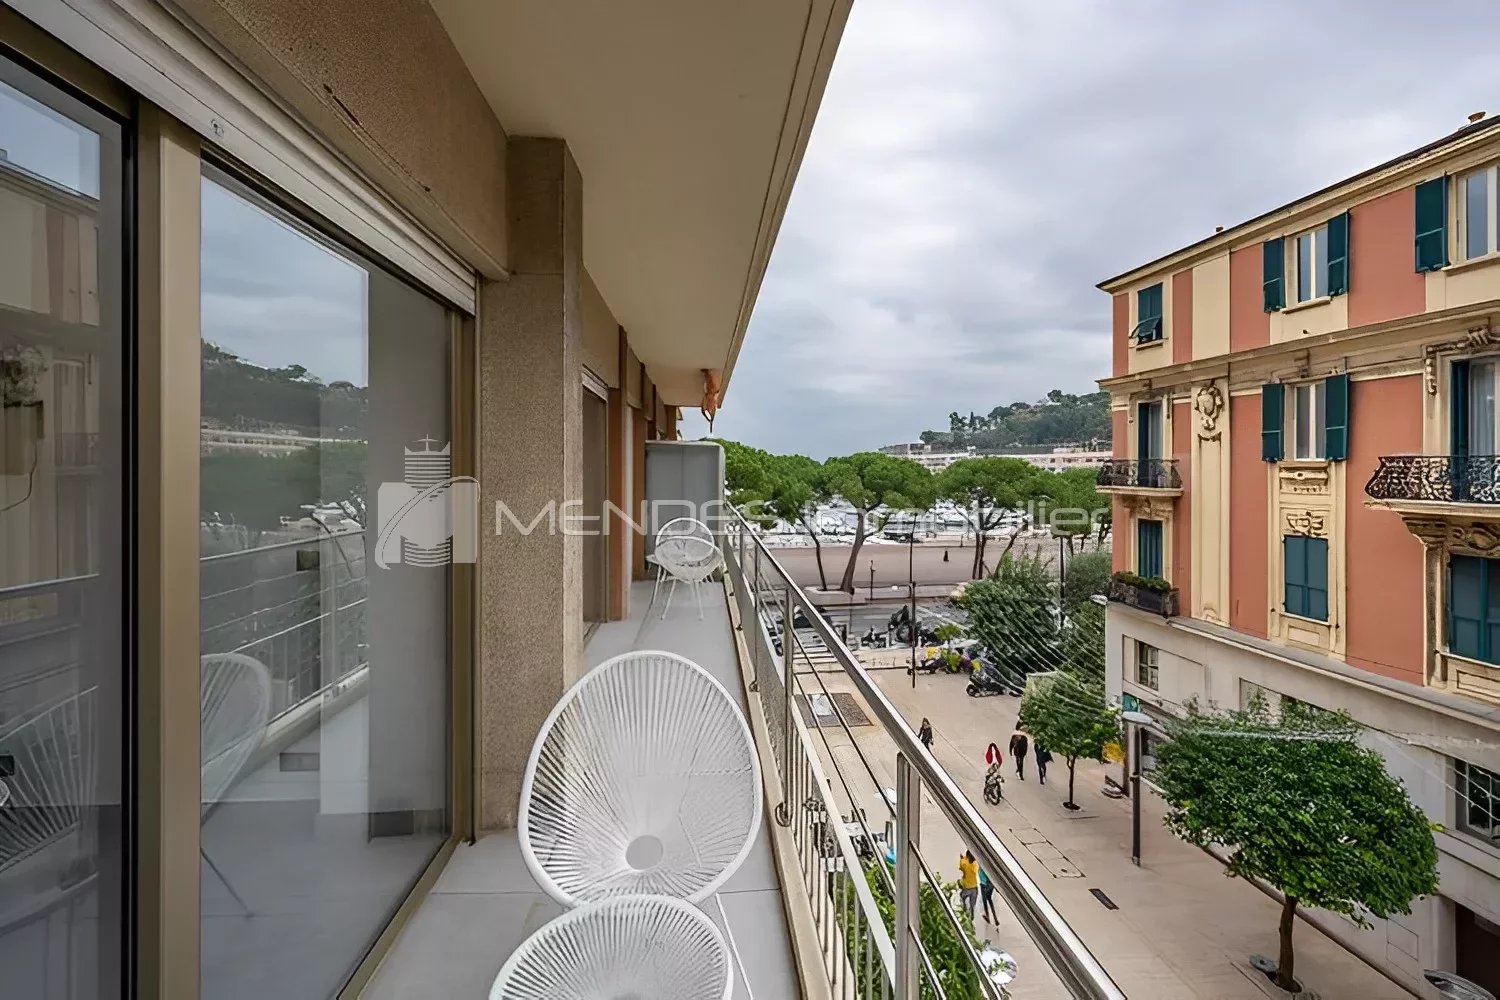 Försäljning Lägenhet - Monaco - Monaco